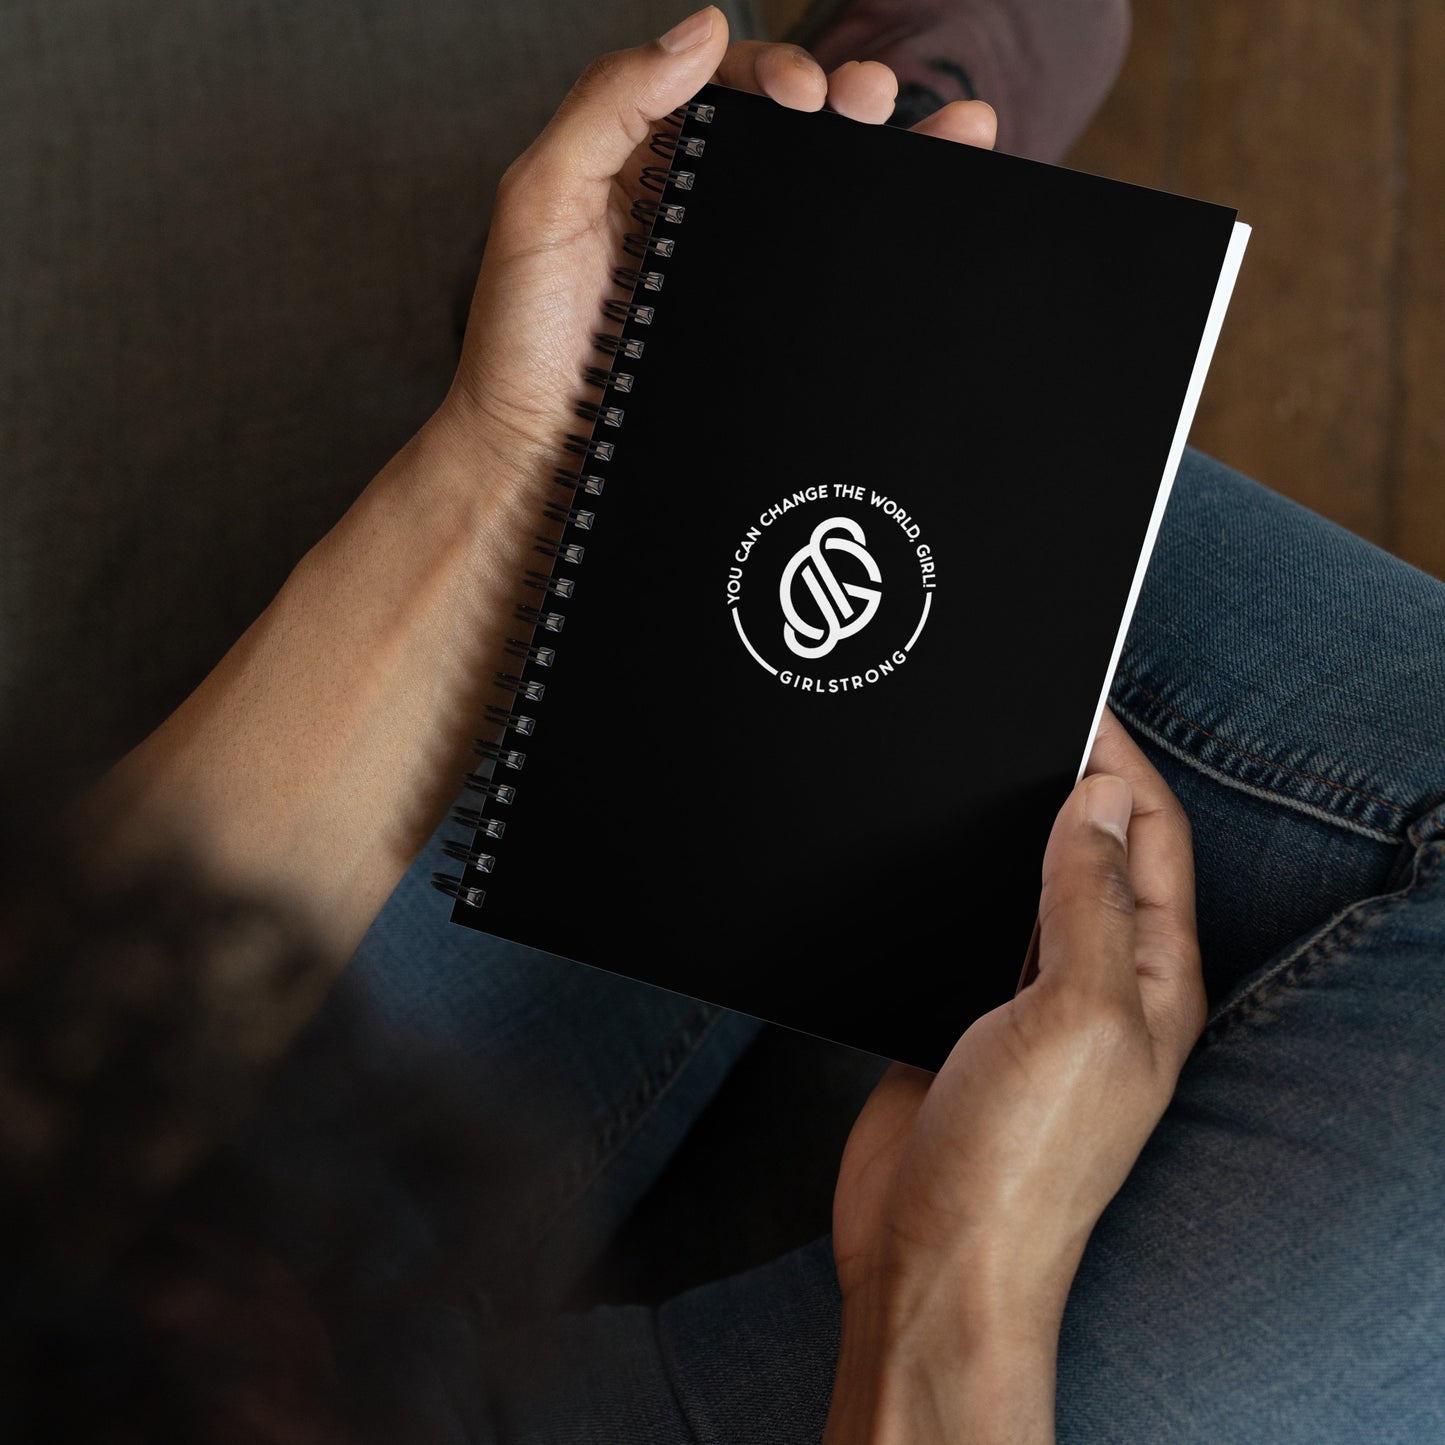 GIRLSTRONG Journal Spiral notebook black cover